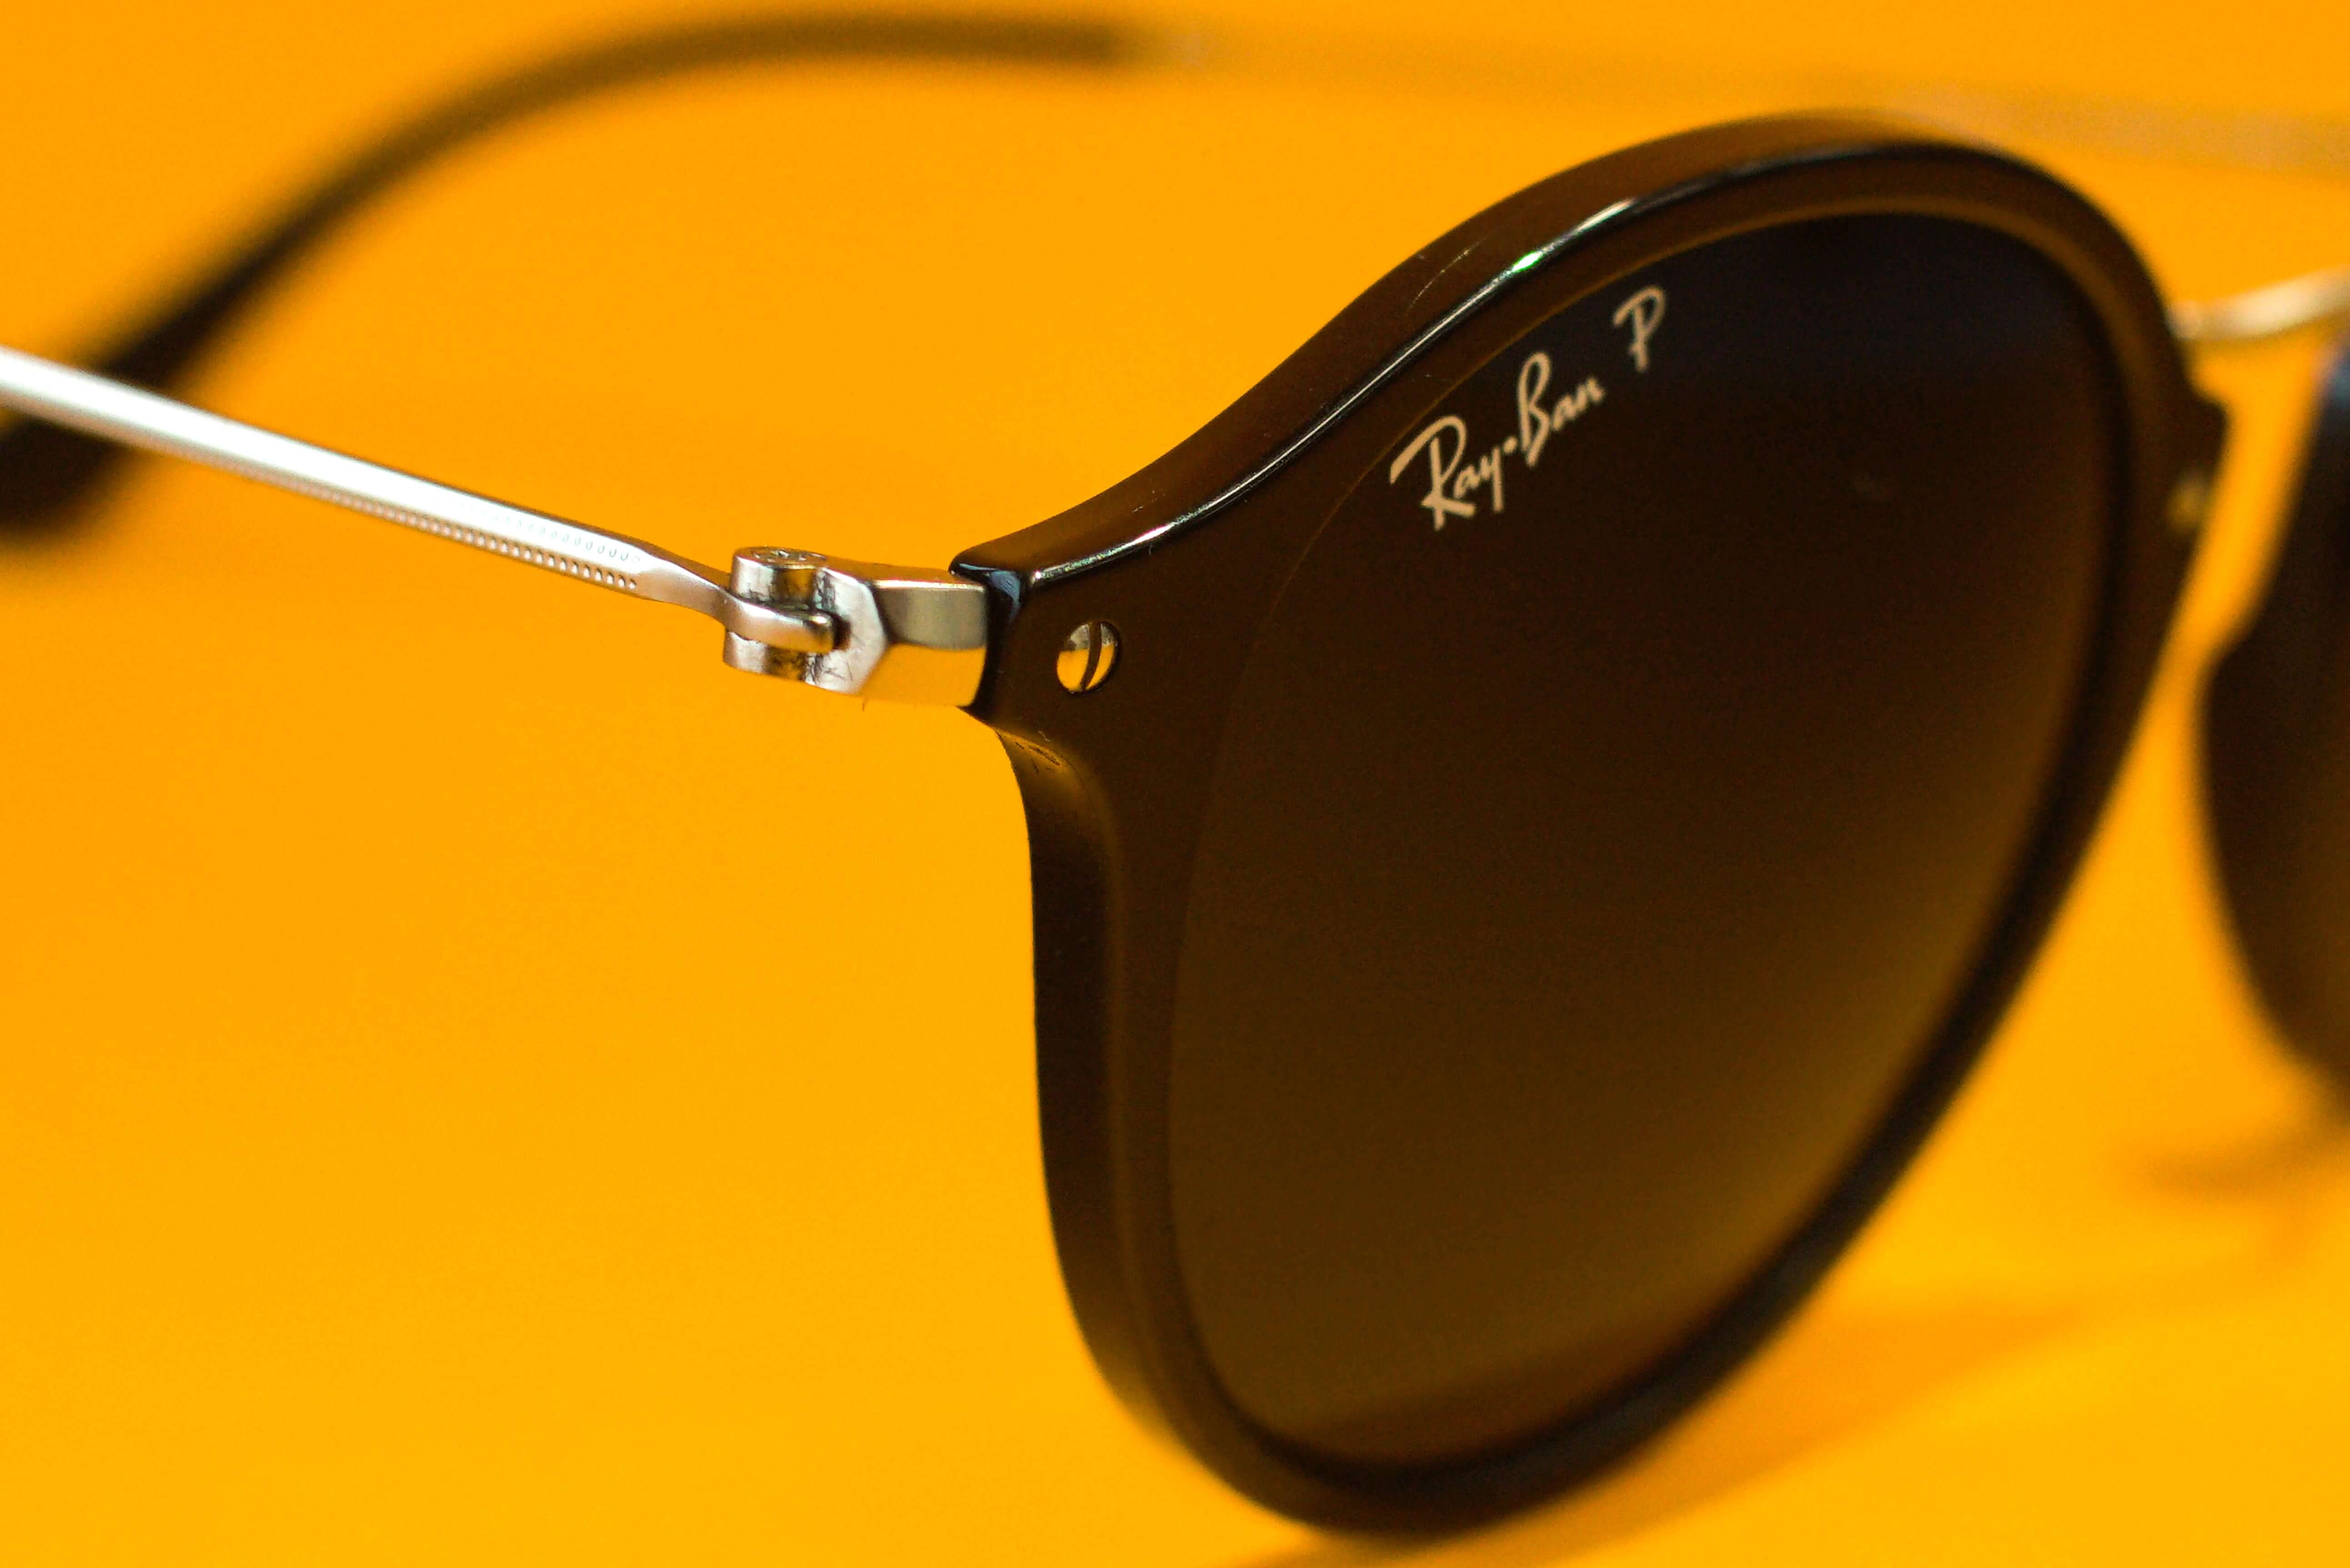 2019 cheap ray ban preScrIPtion sunglasses uk online sale